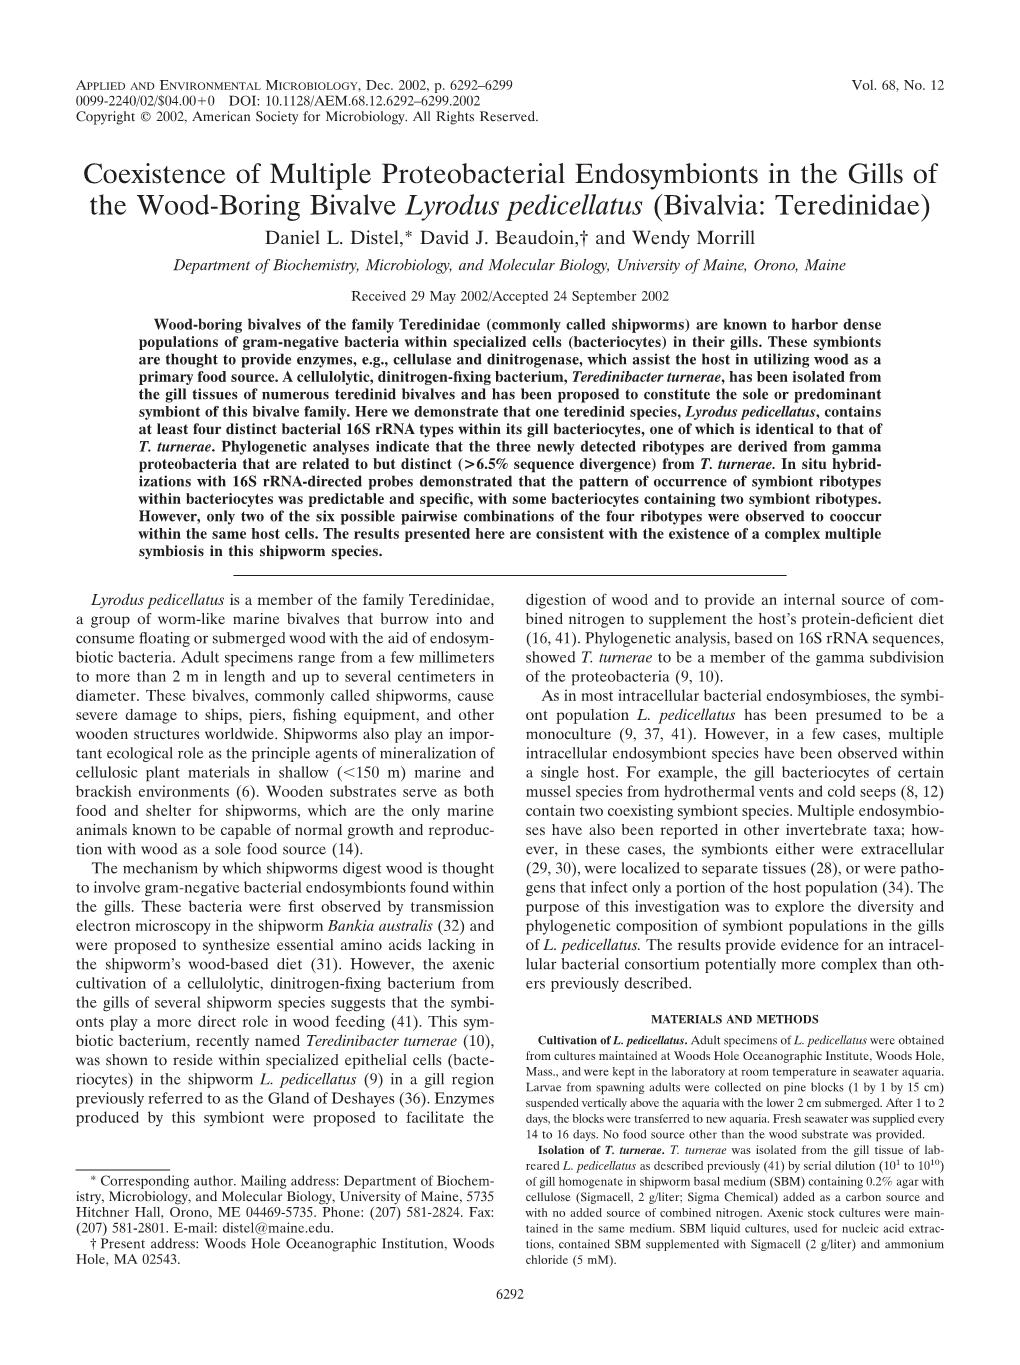 Coexistence of Multiple Proteobacterial Endosymbionts in the Gills of the Wood-Boring Bivalve Lyrodus Pedicellatus (Bivalvia: Teredinidae) Daniel L